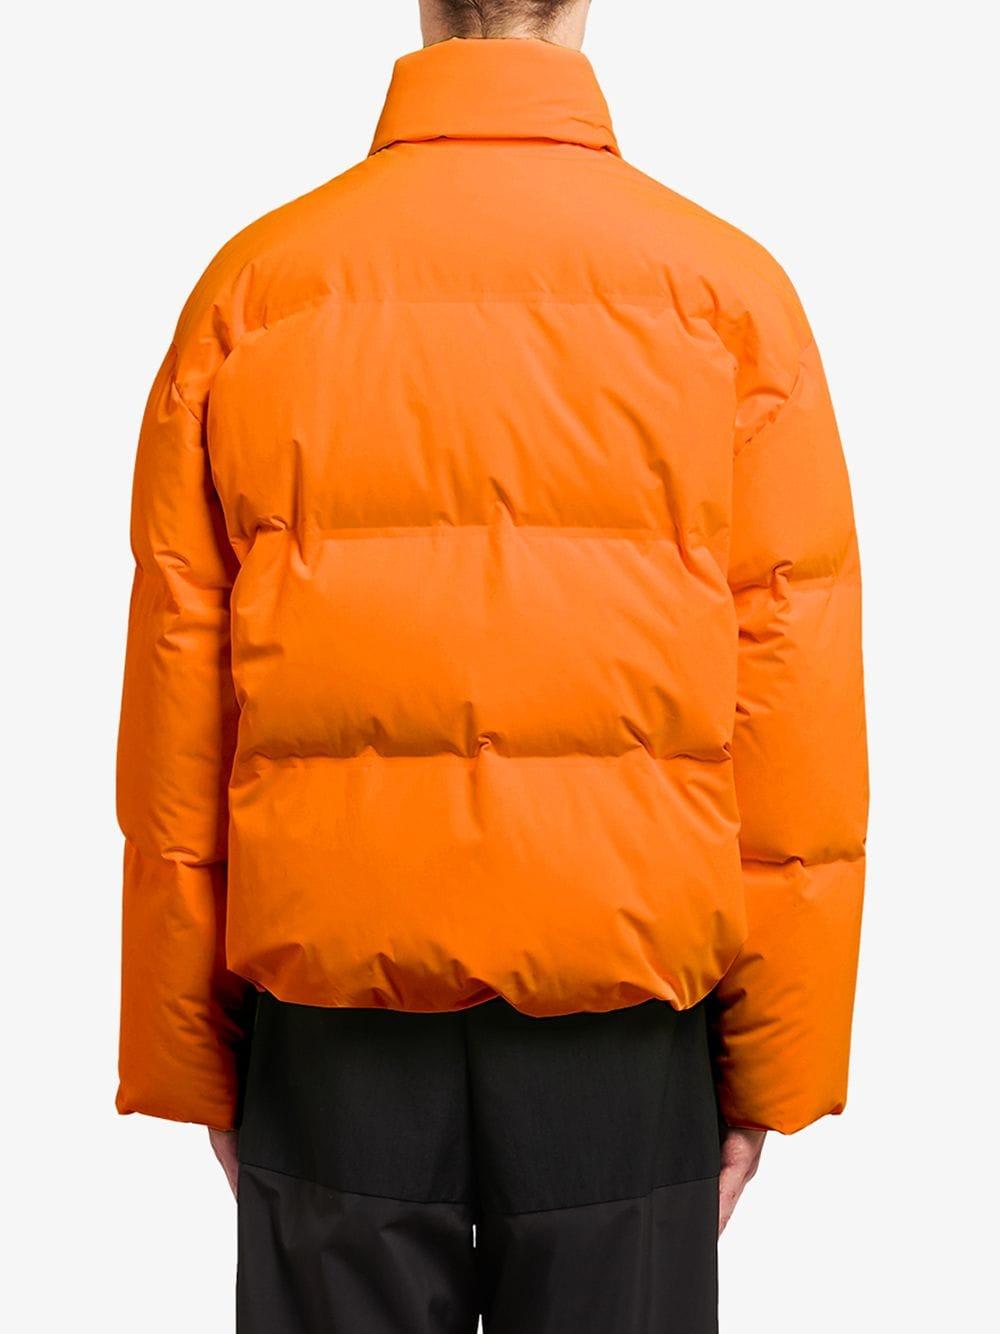 Prada Puffer Jacket in Orange for Men - Lyst